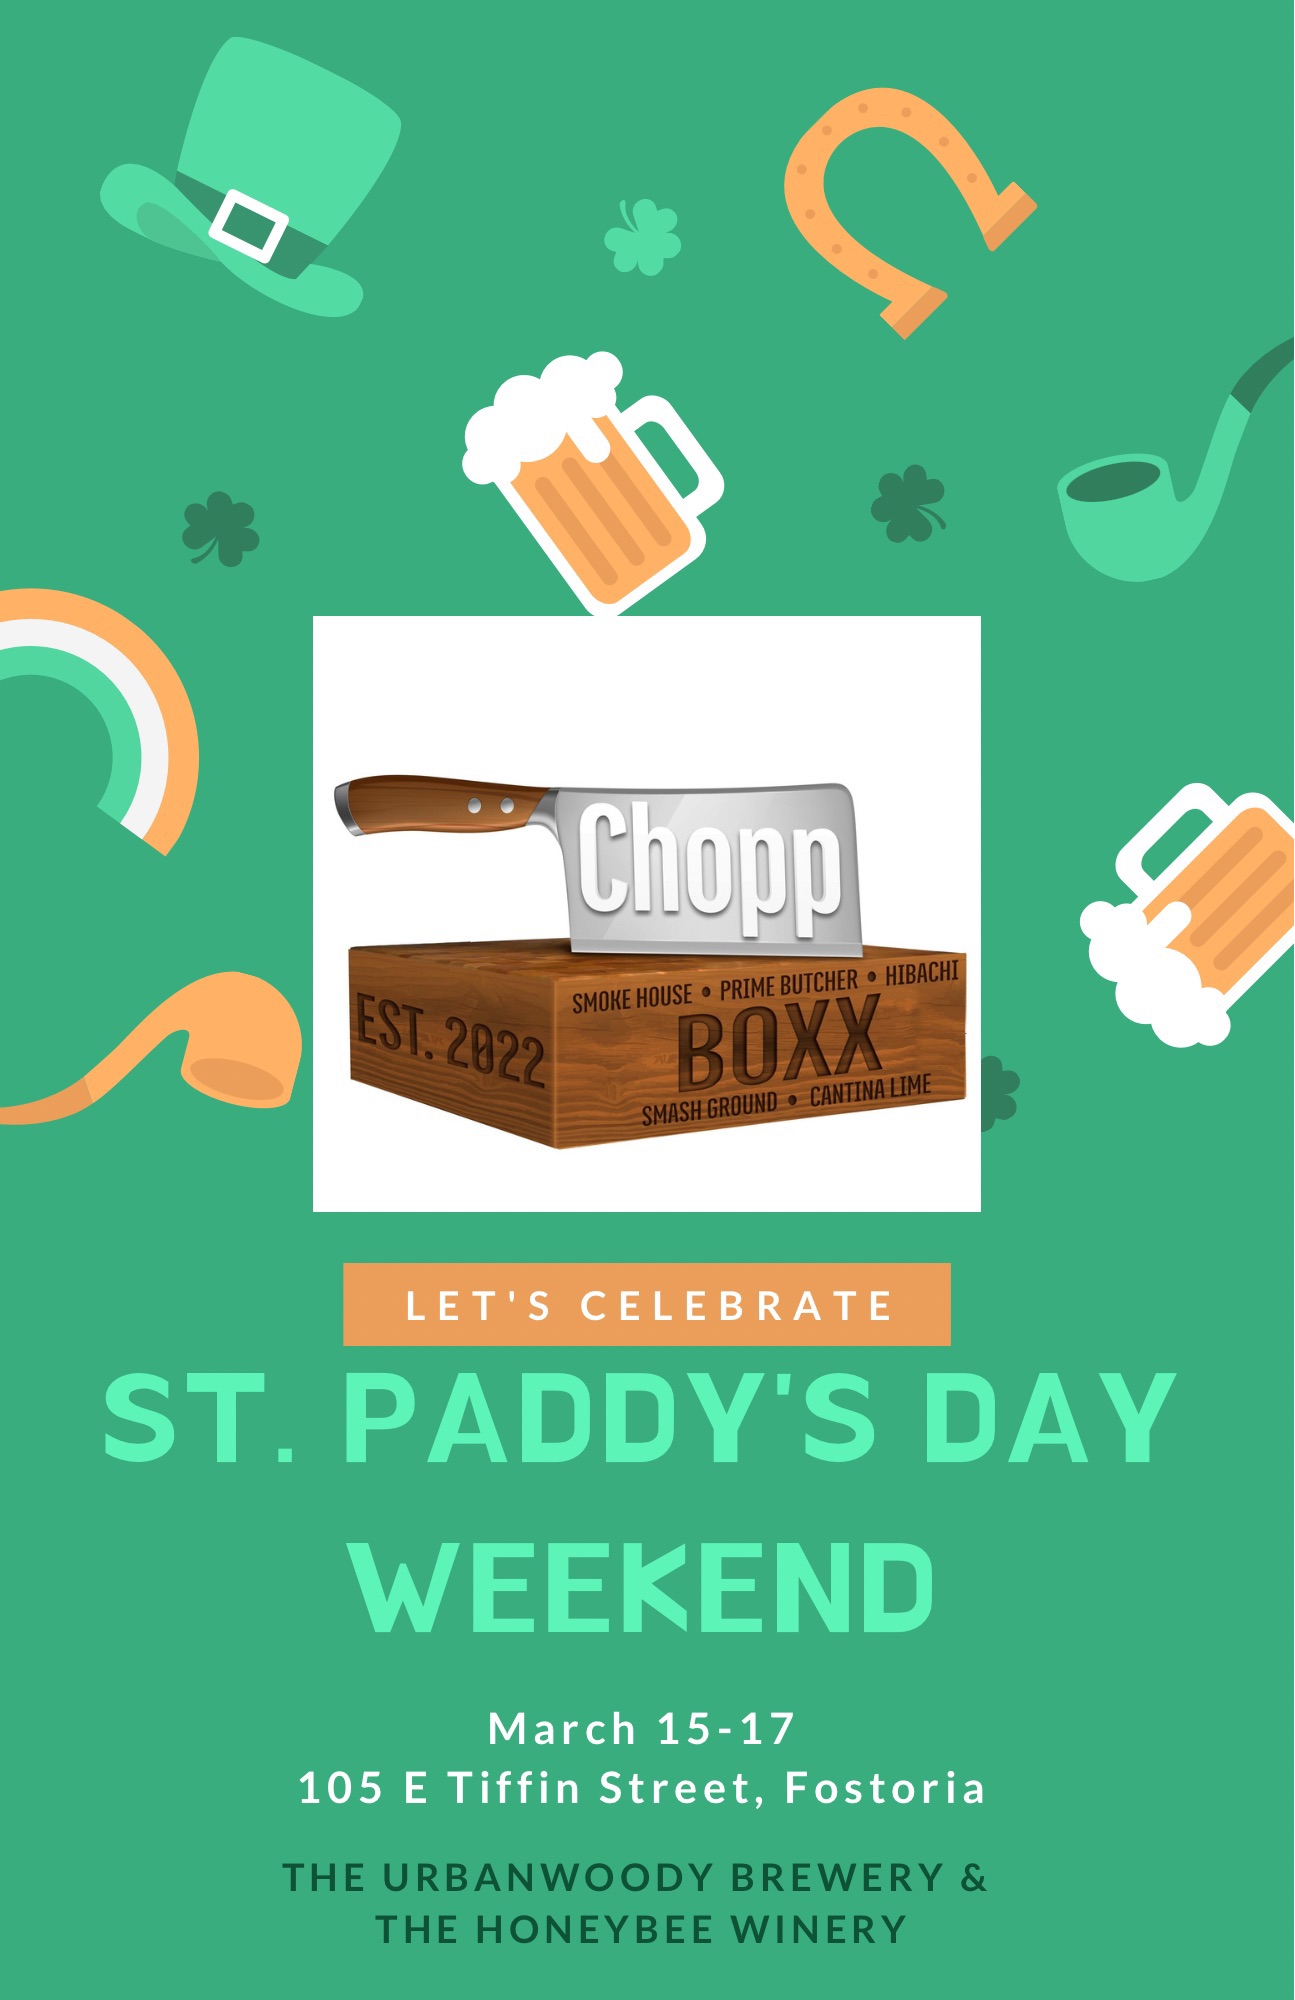 Chopp Box - St. Patrick's Day Weekend